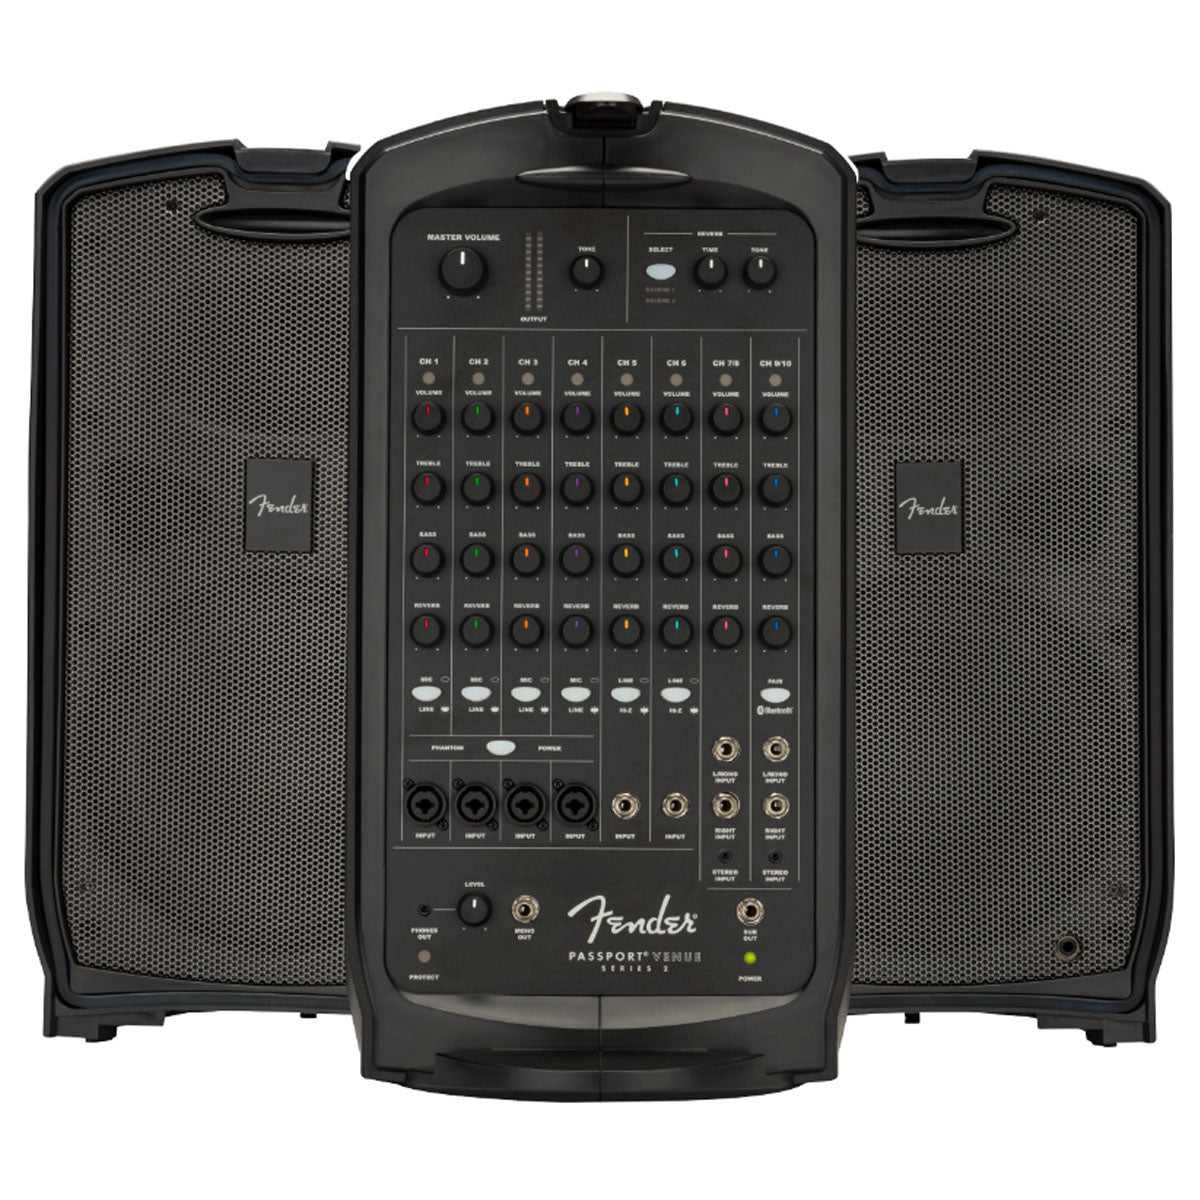 Fender Passport Venue Series 2 PA System 600W w/ Bluetooth - 6944003900